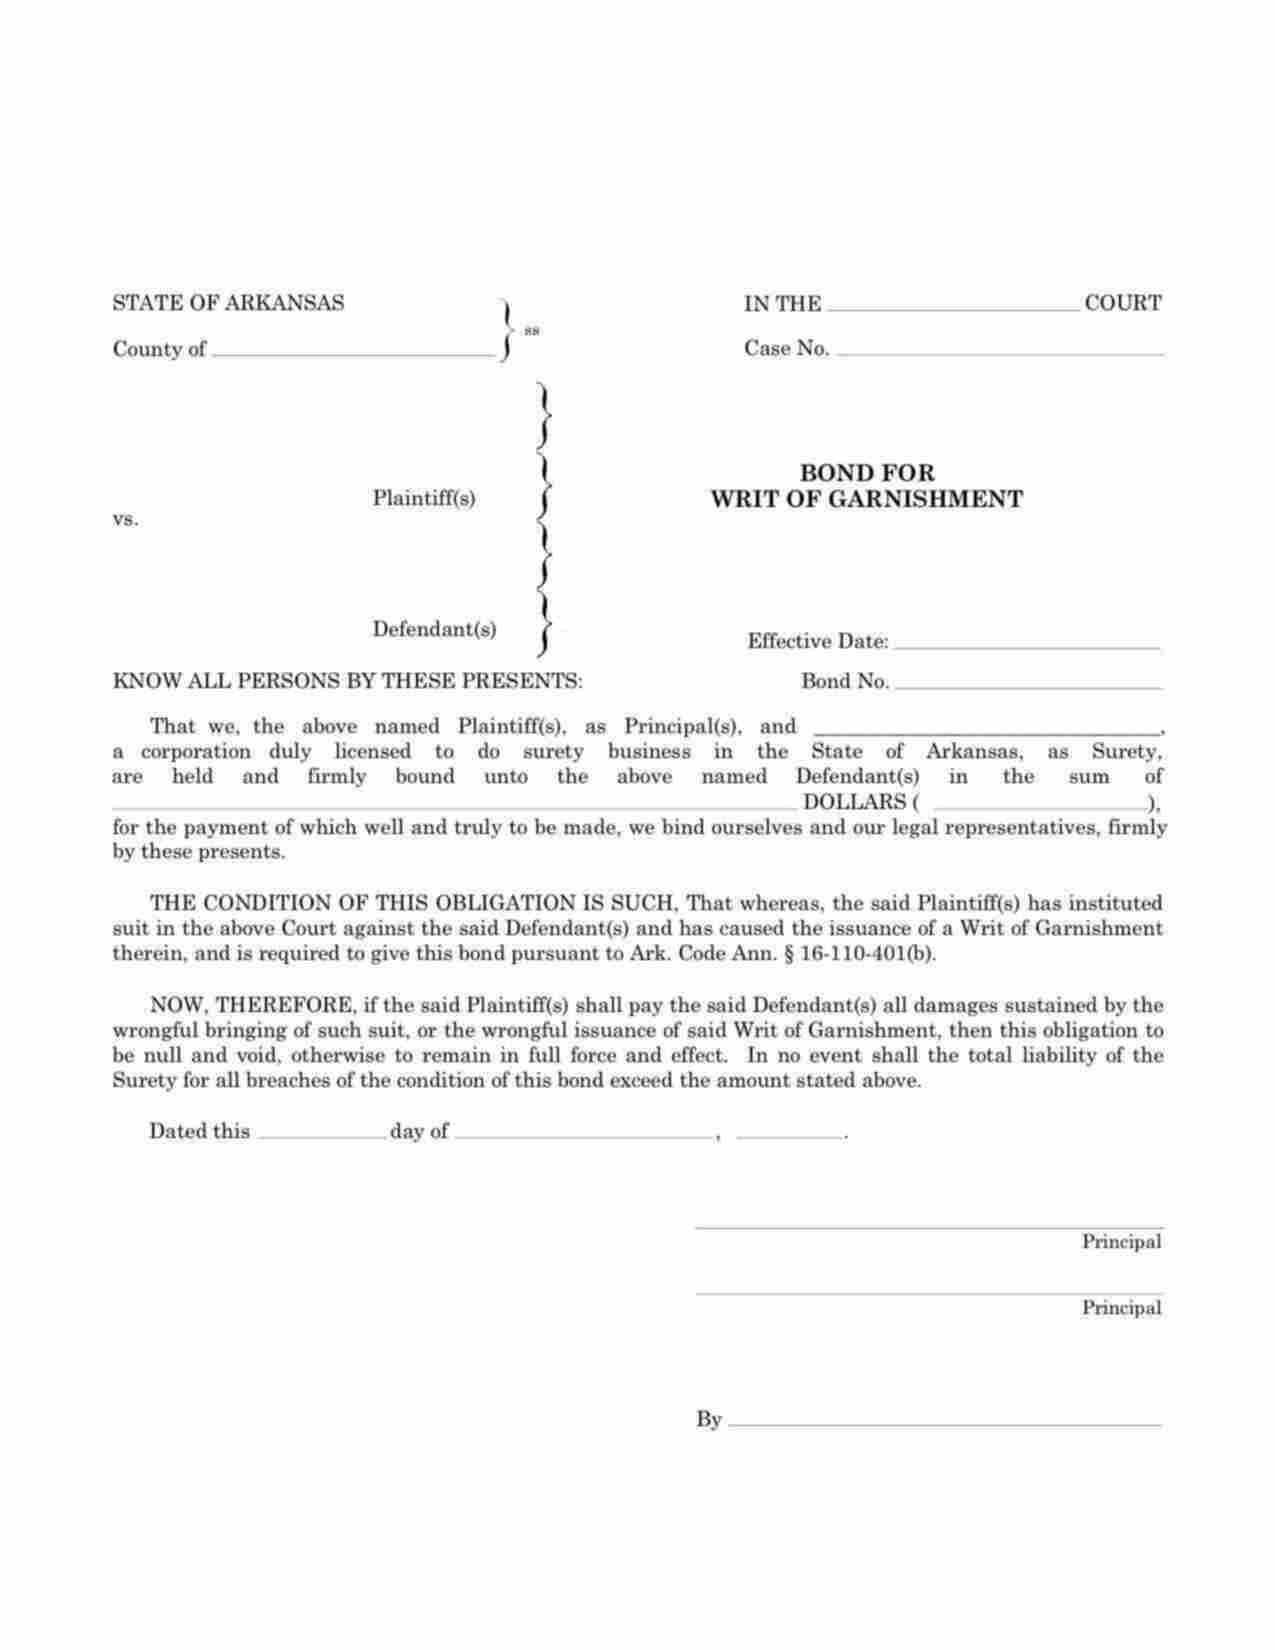 Arkansas Writ of Garnishment Bond Form